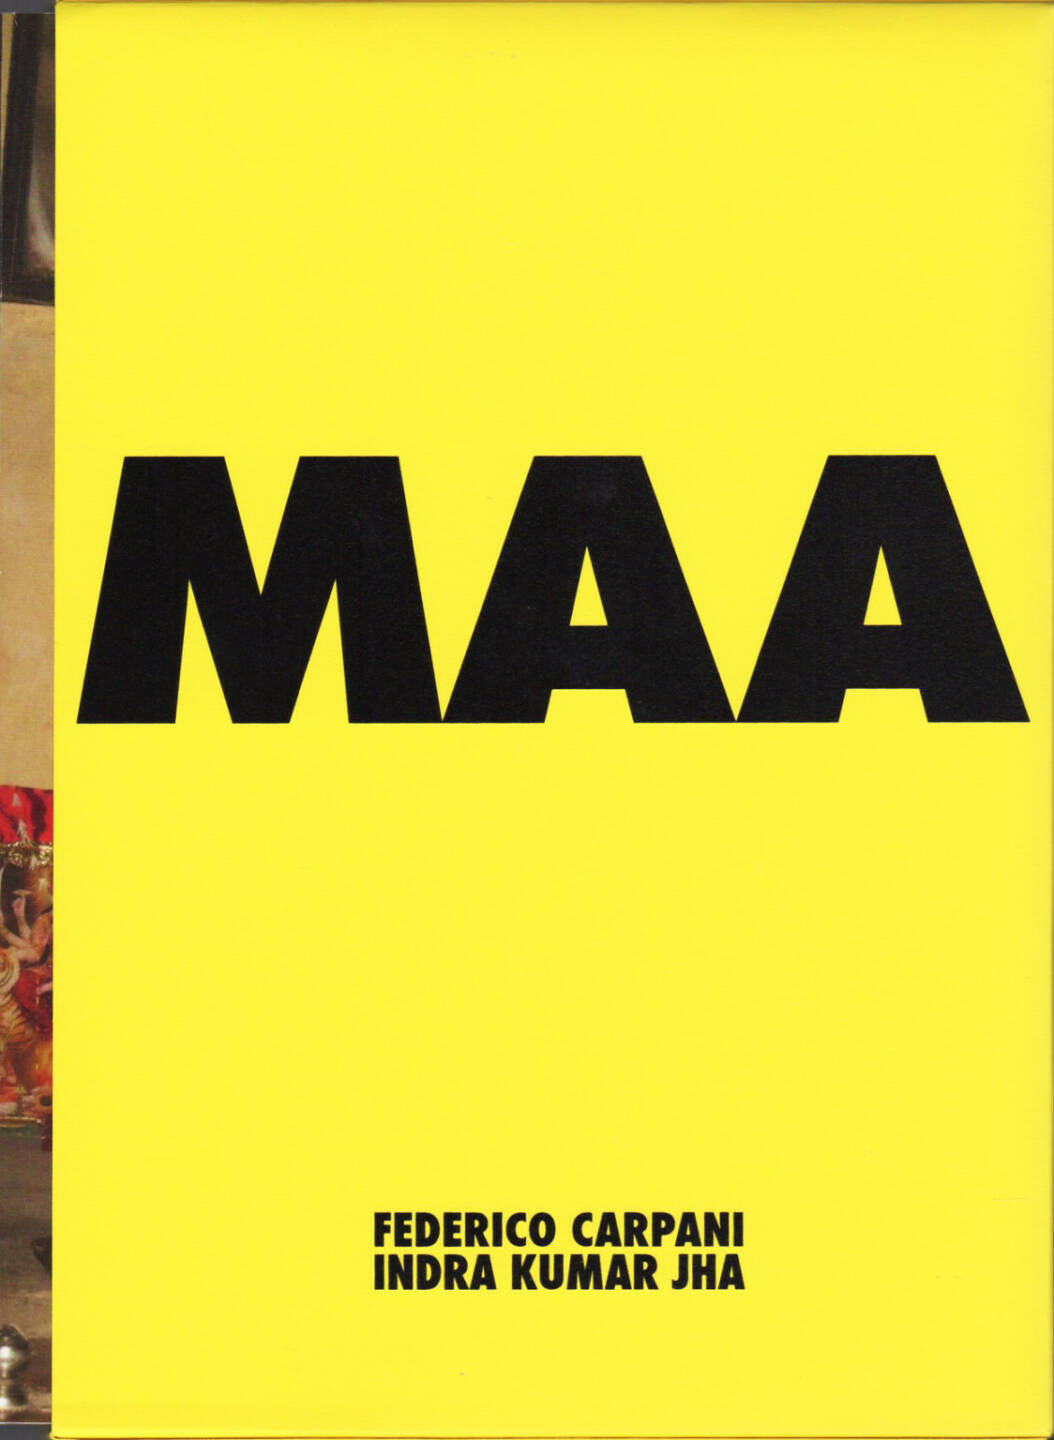 Indra Kumar Jha & Federico Carpani - MAA, Self published 2015, Cover - http://josefchladek.com/book/indra_kumar_jha_federico_carpani_-_maa